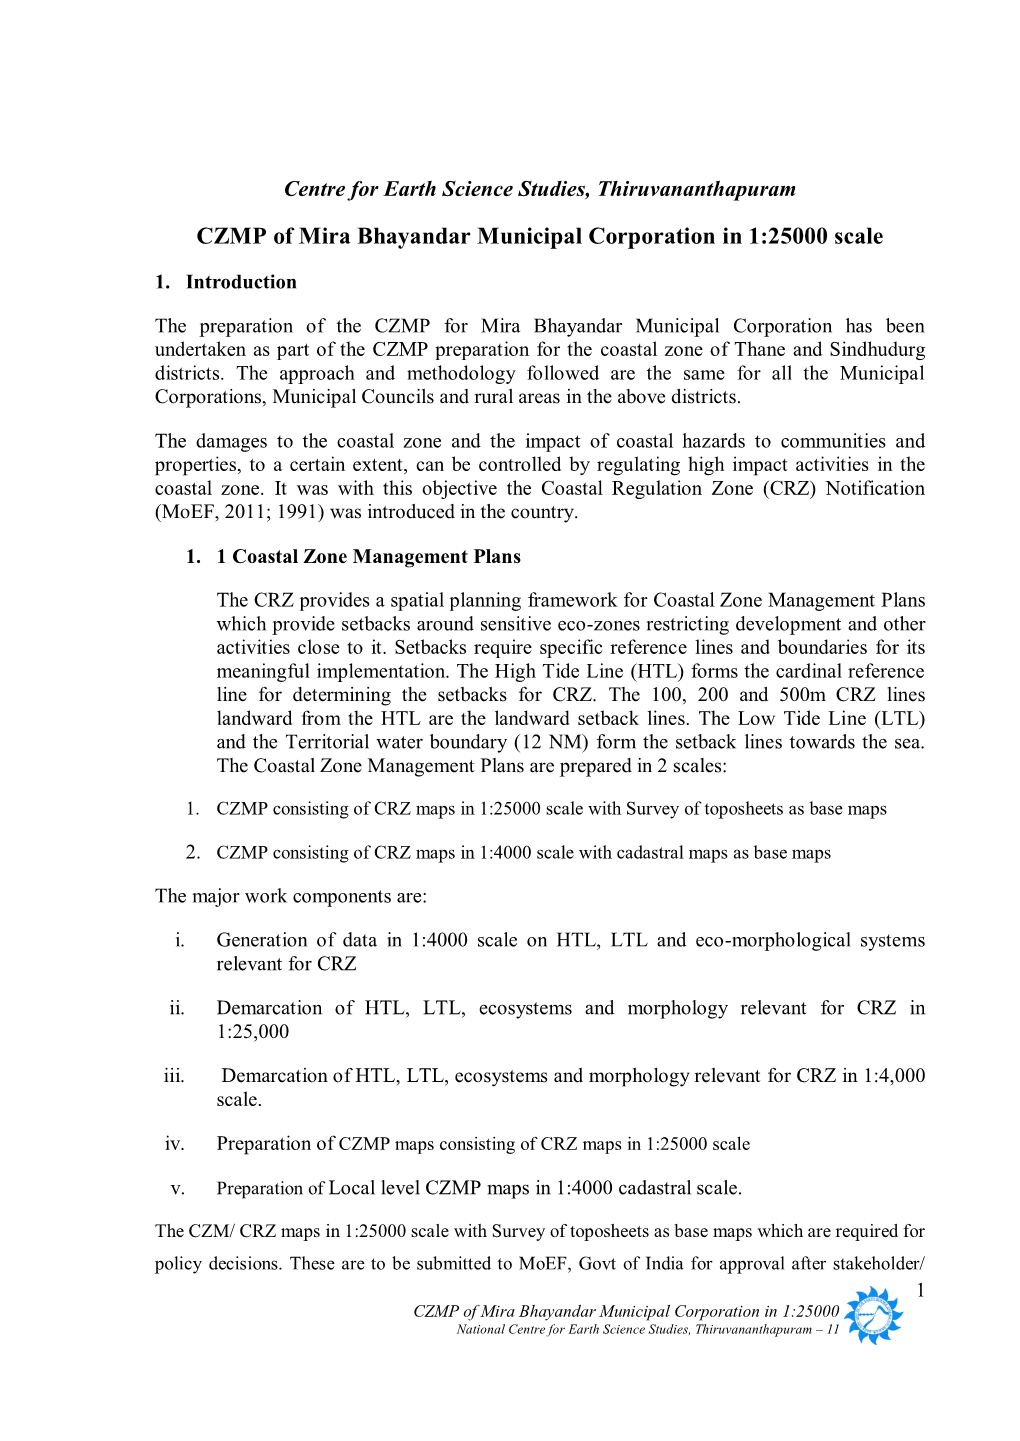 CZMP of Mira Bhayandar Municipal Corporation in 1:25000 Scale